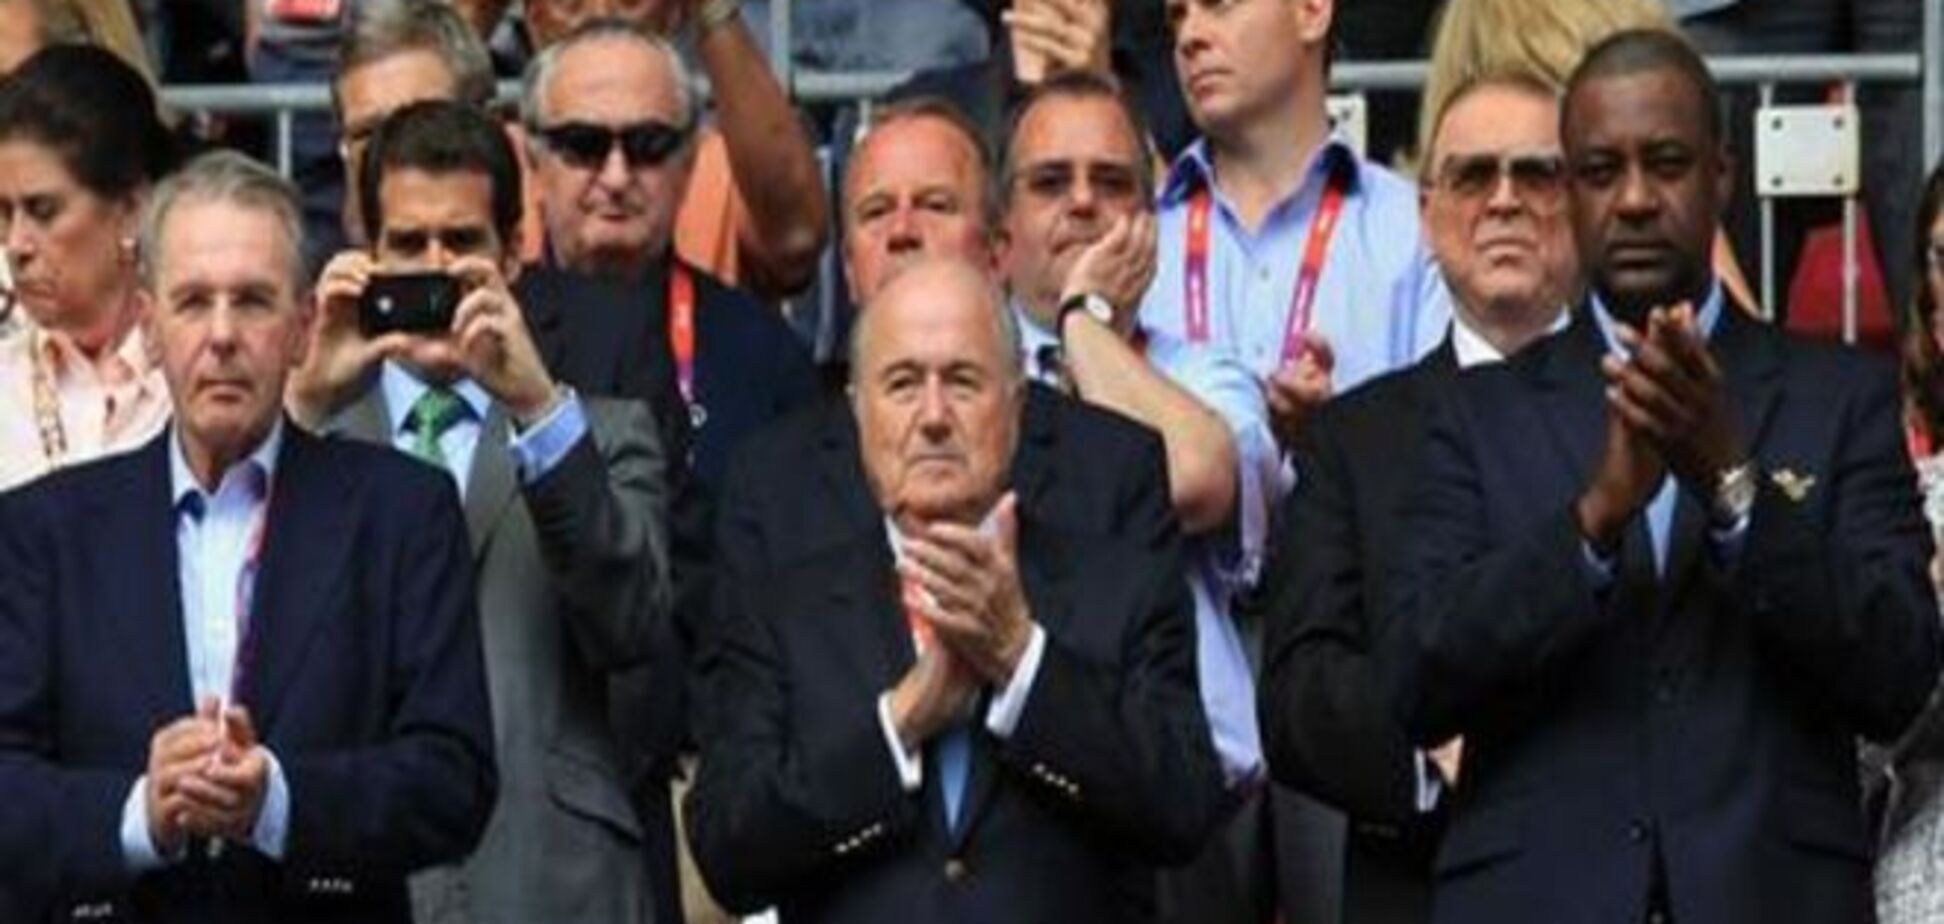 Хронология: скандалы в ФИФА при Блаттере